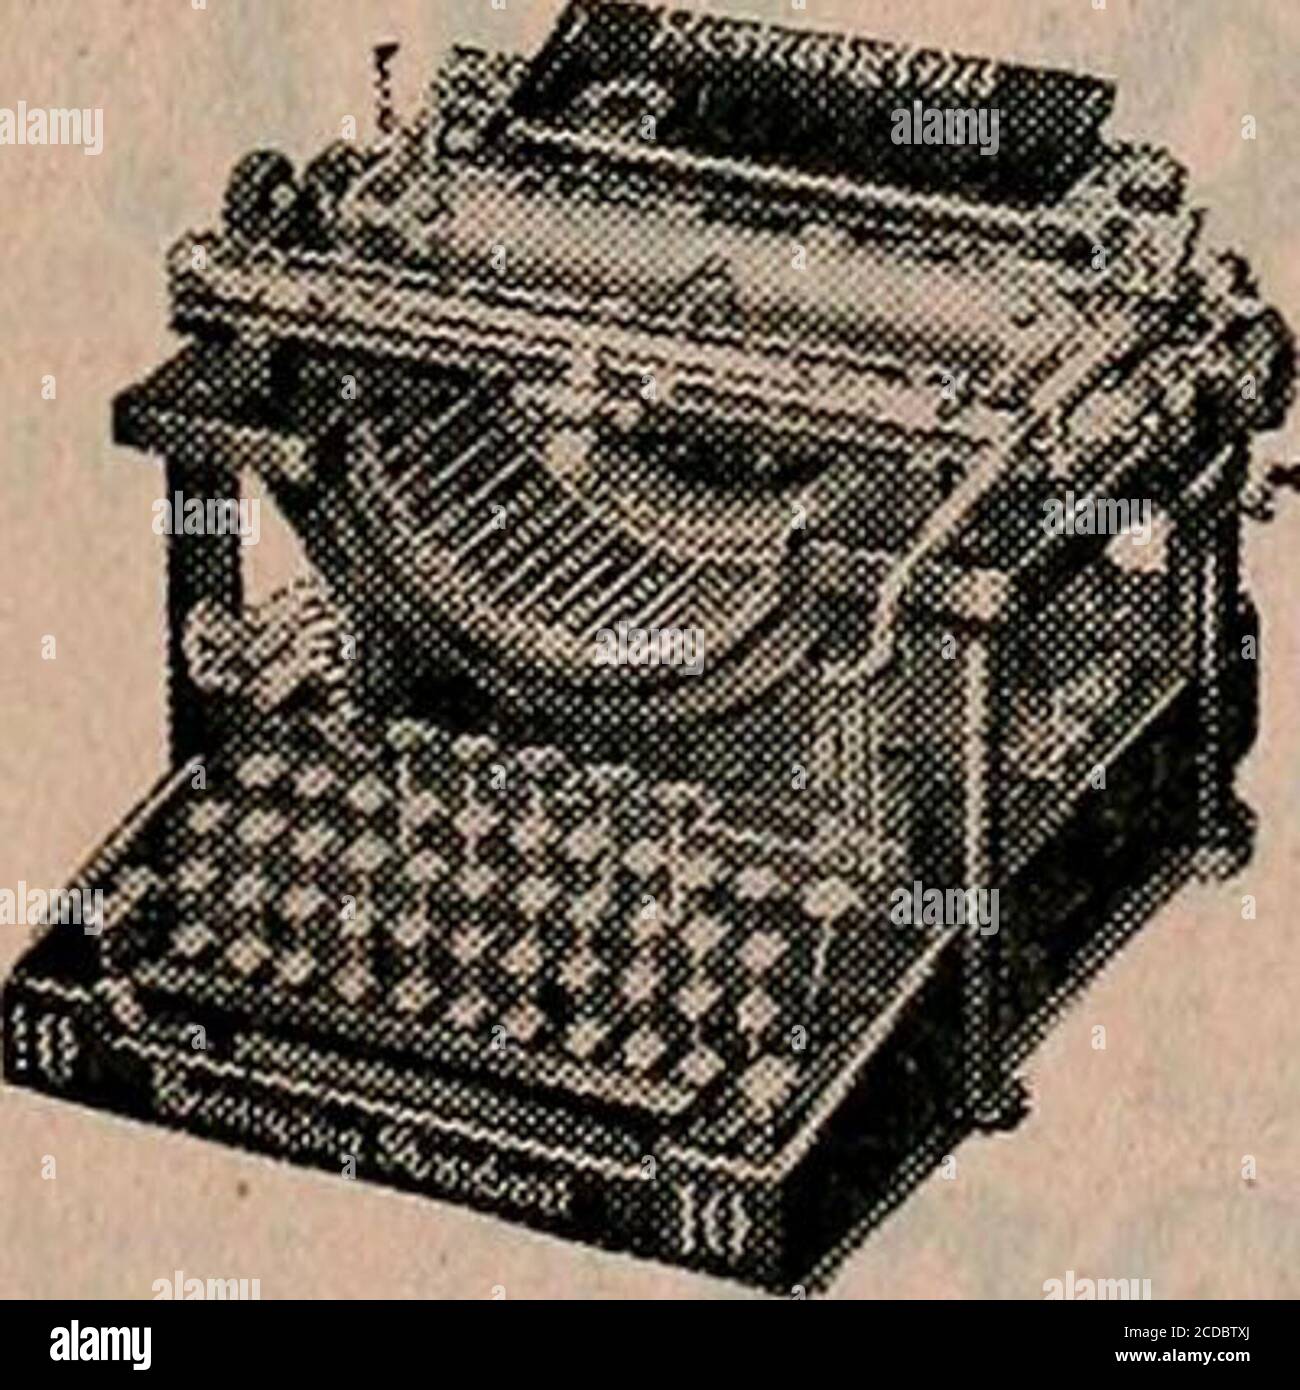 MaE - American Writing Machine Company - New Century 6 C…